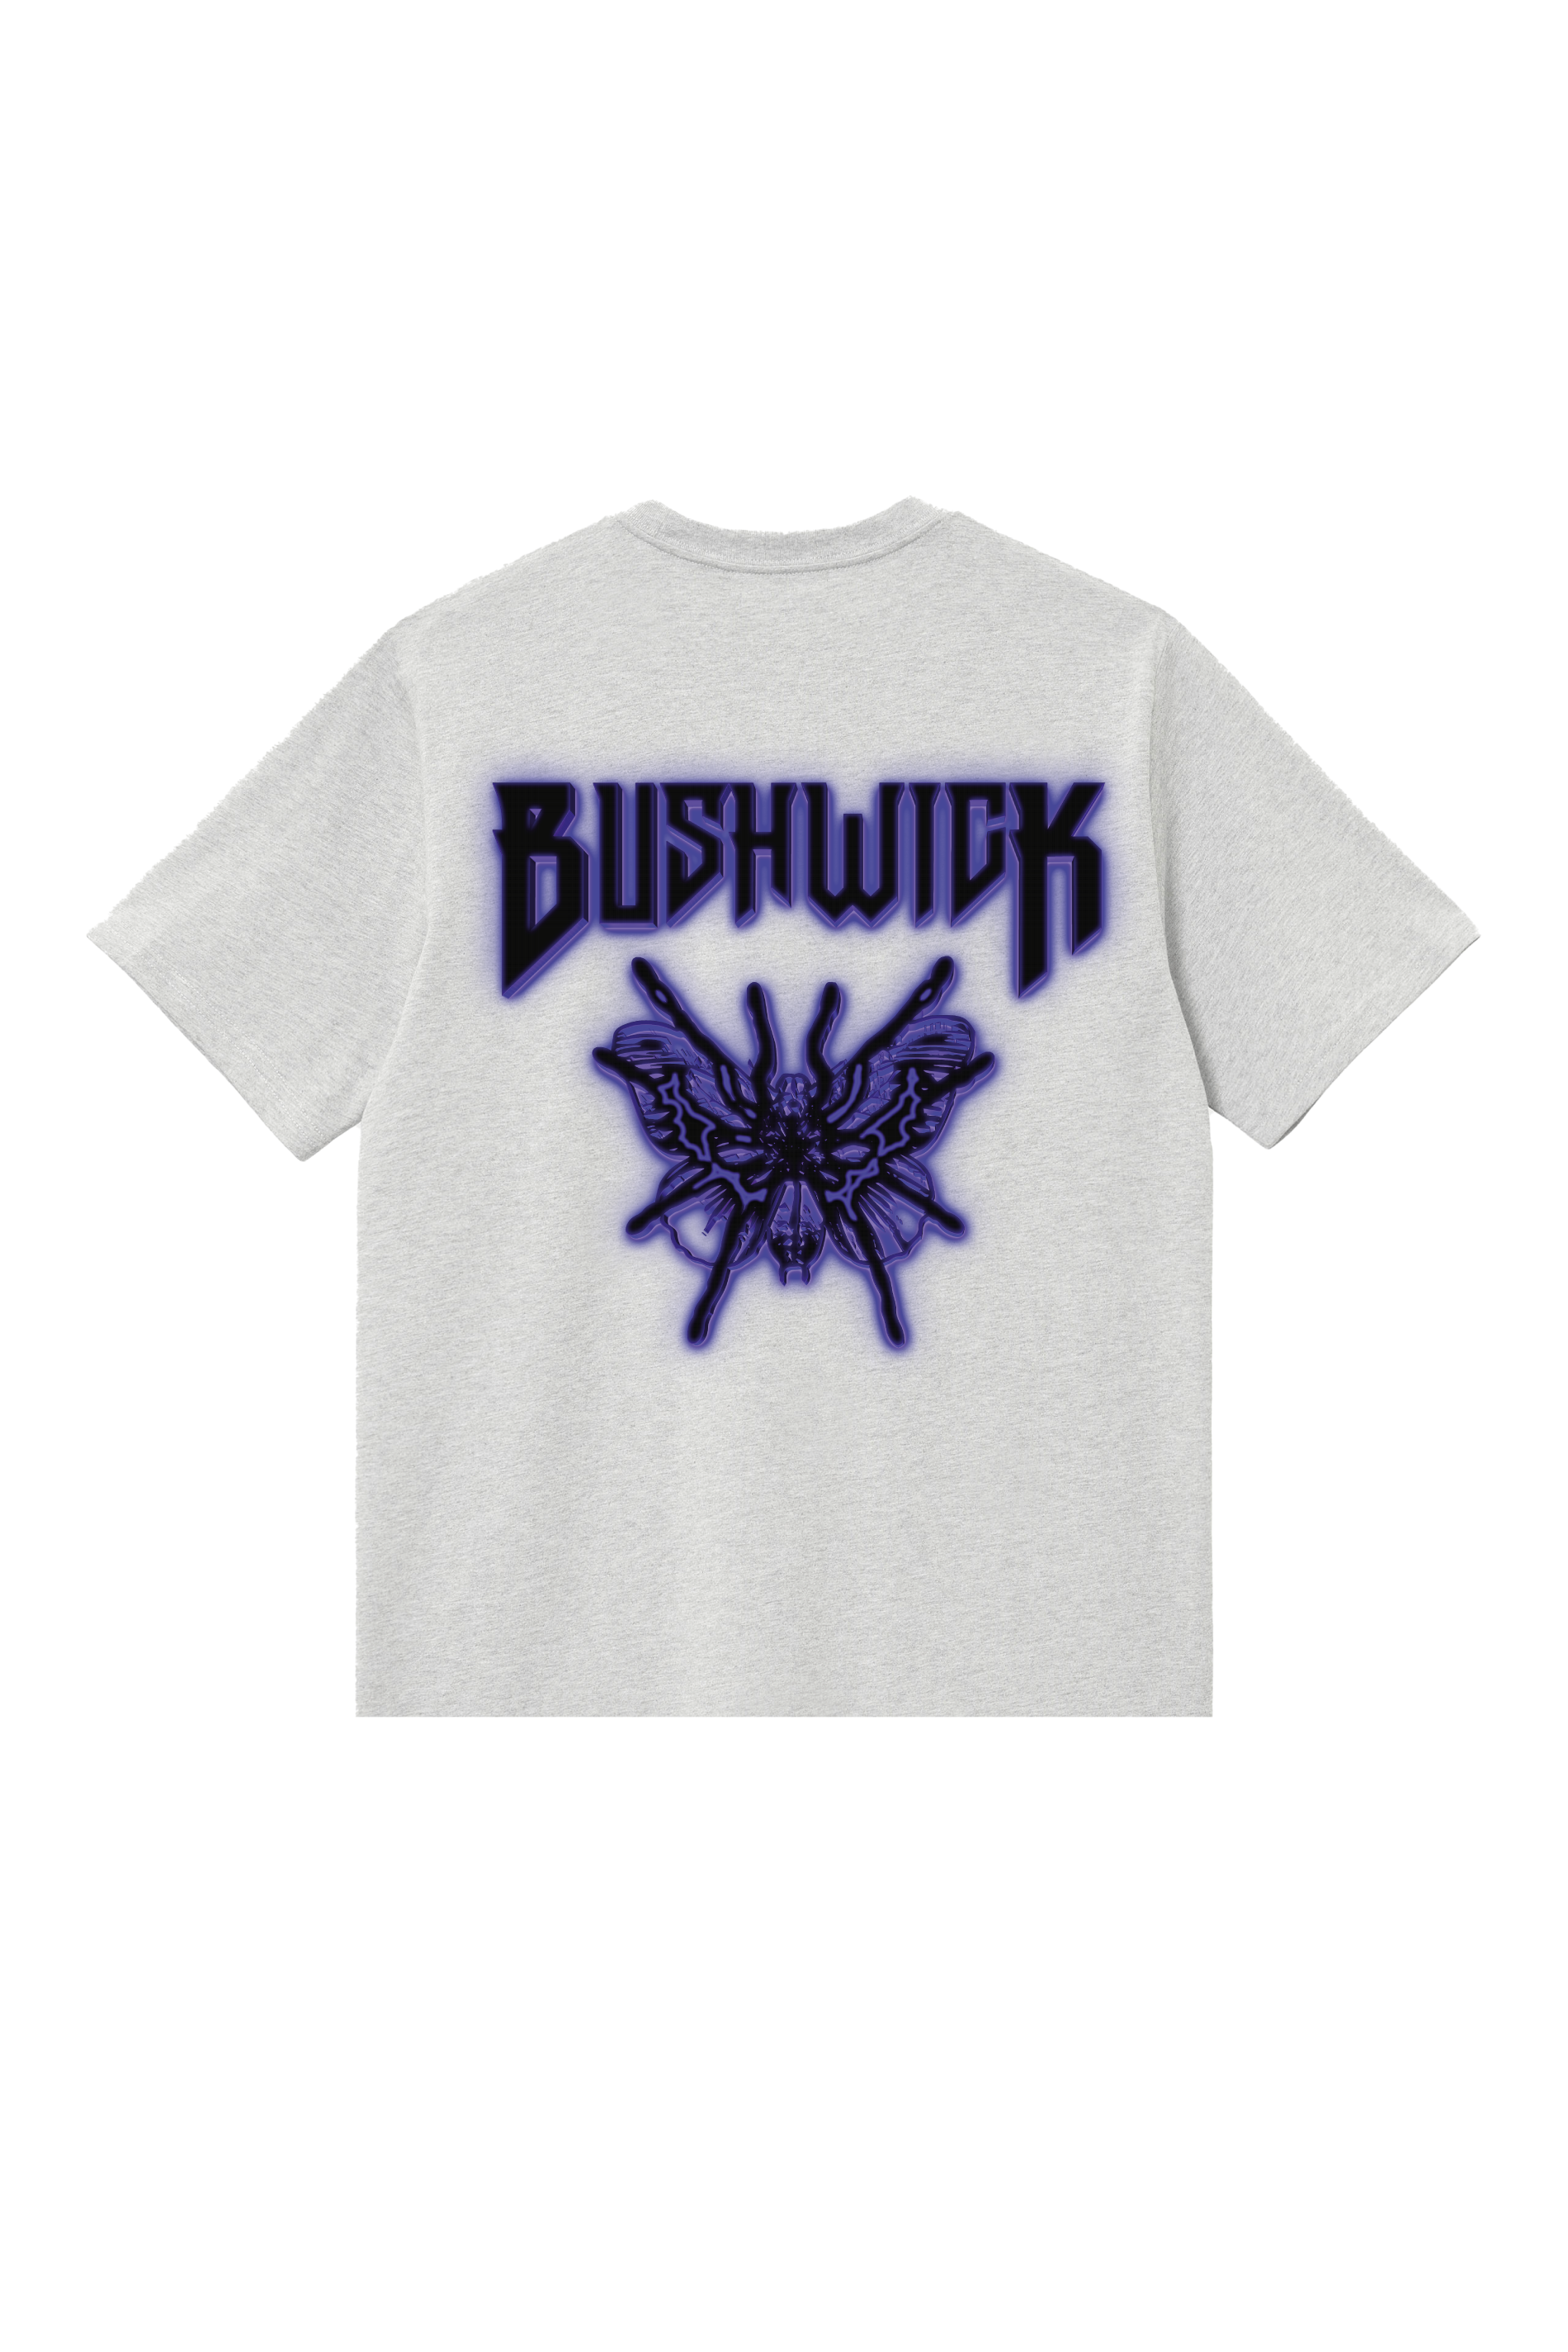 Bushwick T-Shirt uomo Butterfly